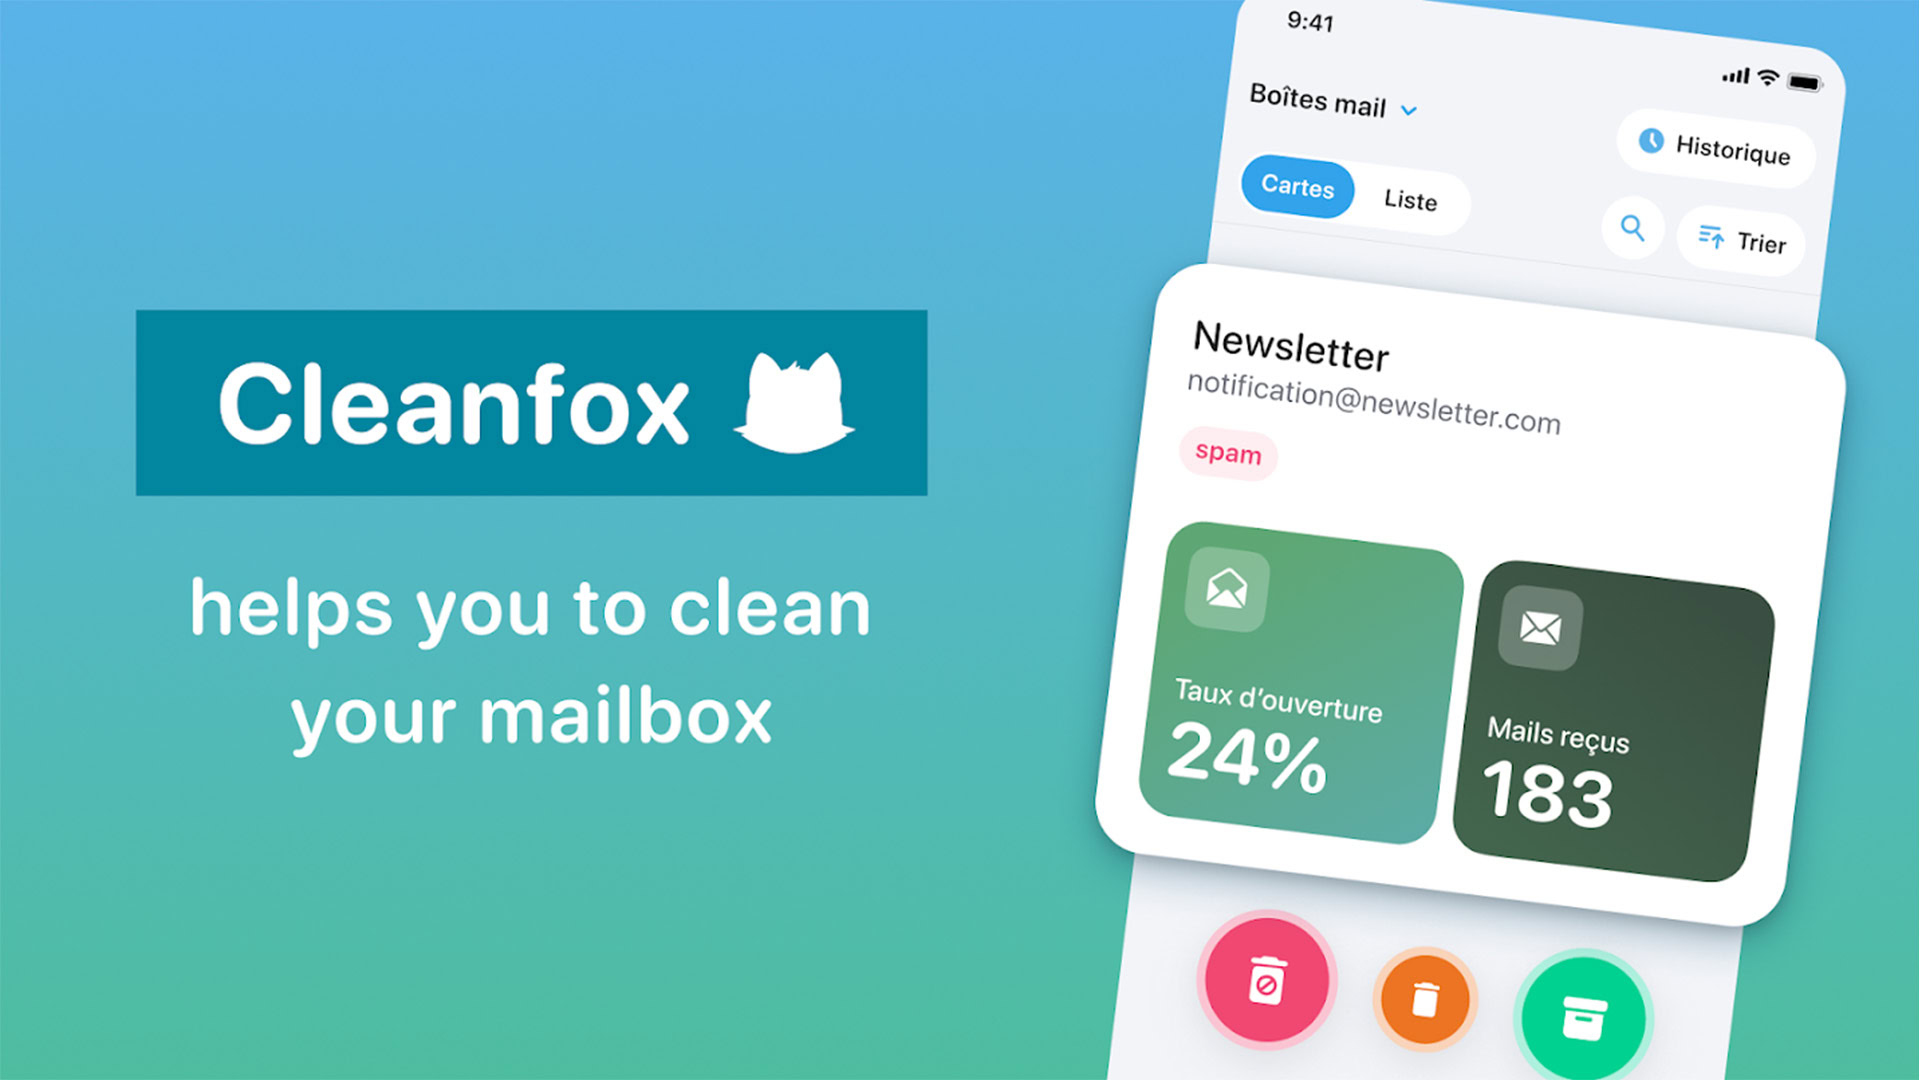 Cleanfox screenshot 2022